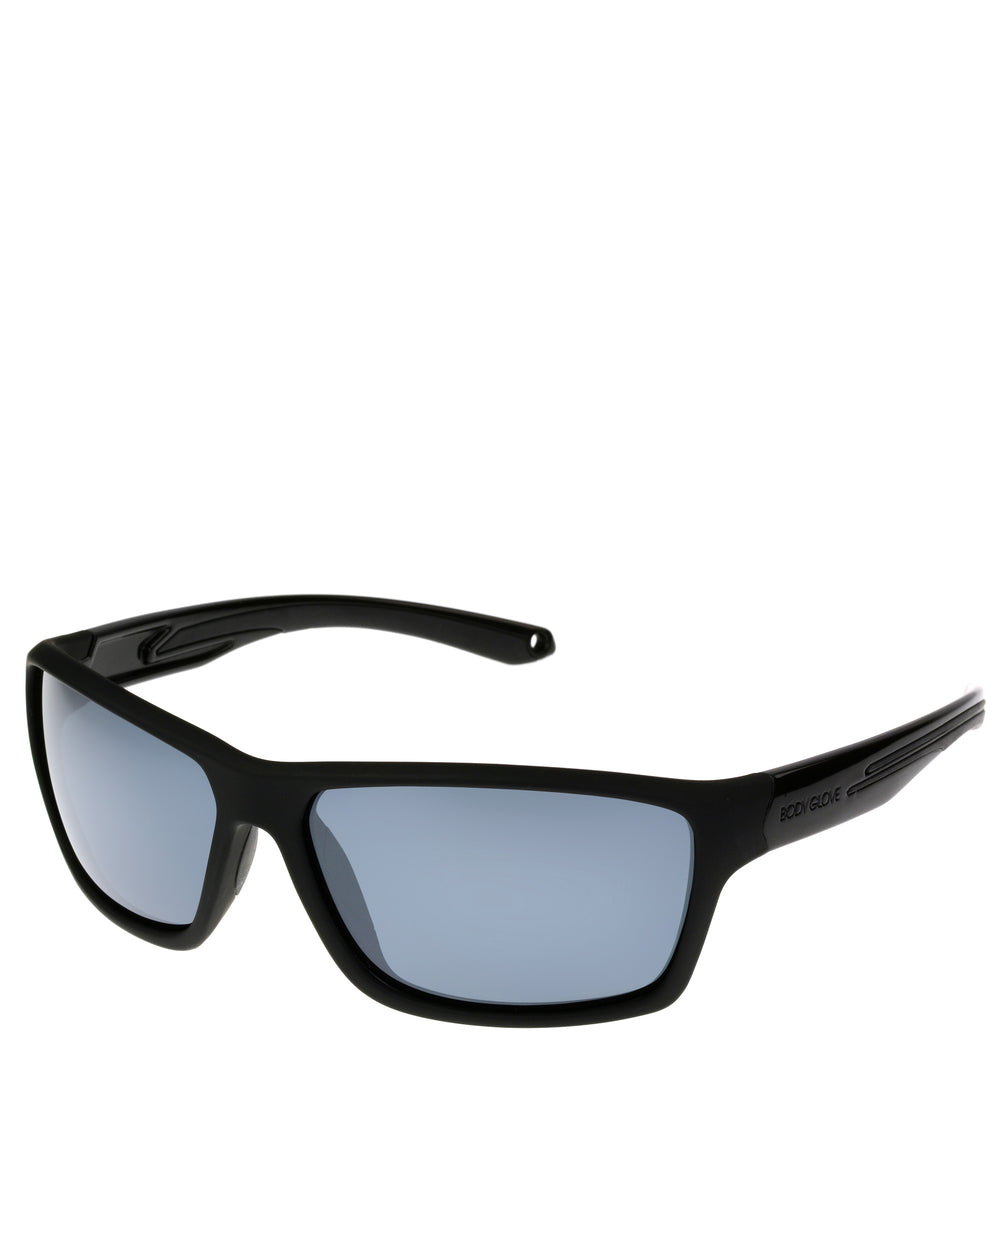 Men's FL26 Floating Polarized Sunglasses - Black - Body Glove